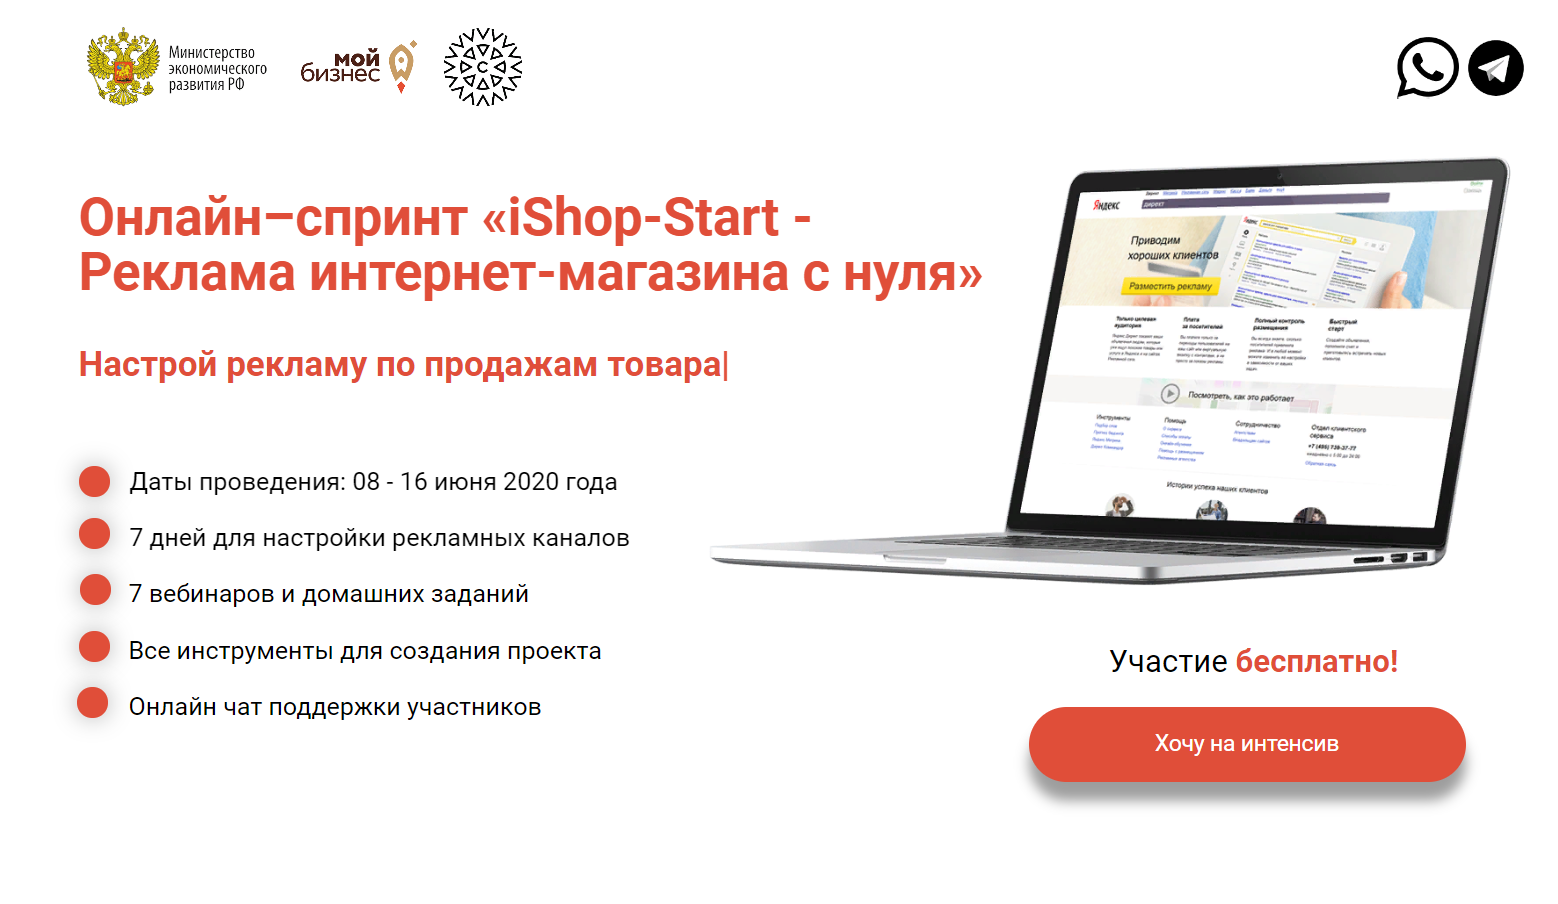 Предпринимателей региона приглашают на онлайн интенсив «iShop-Start — Интернет магазин с нуля»